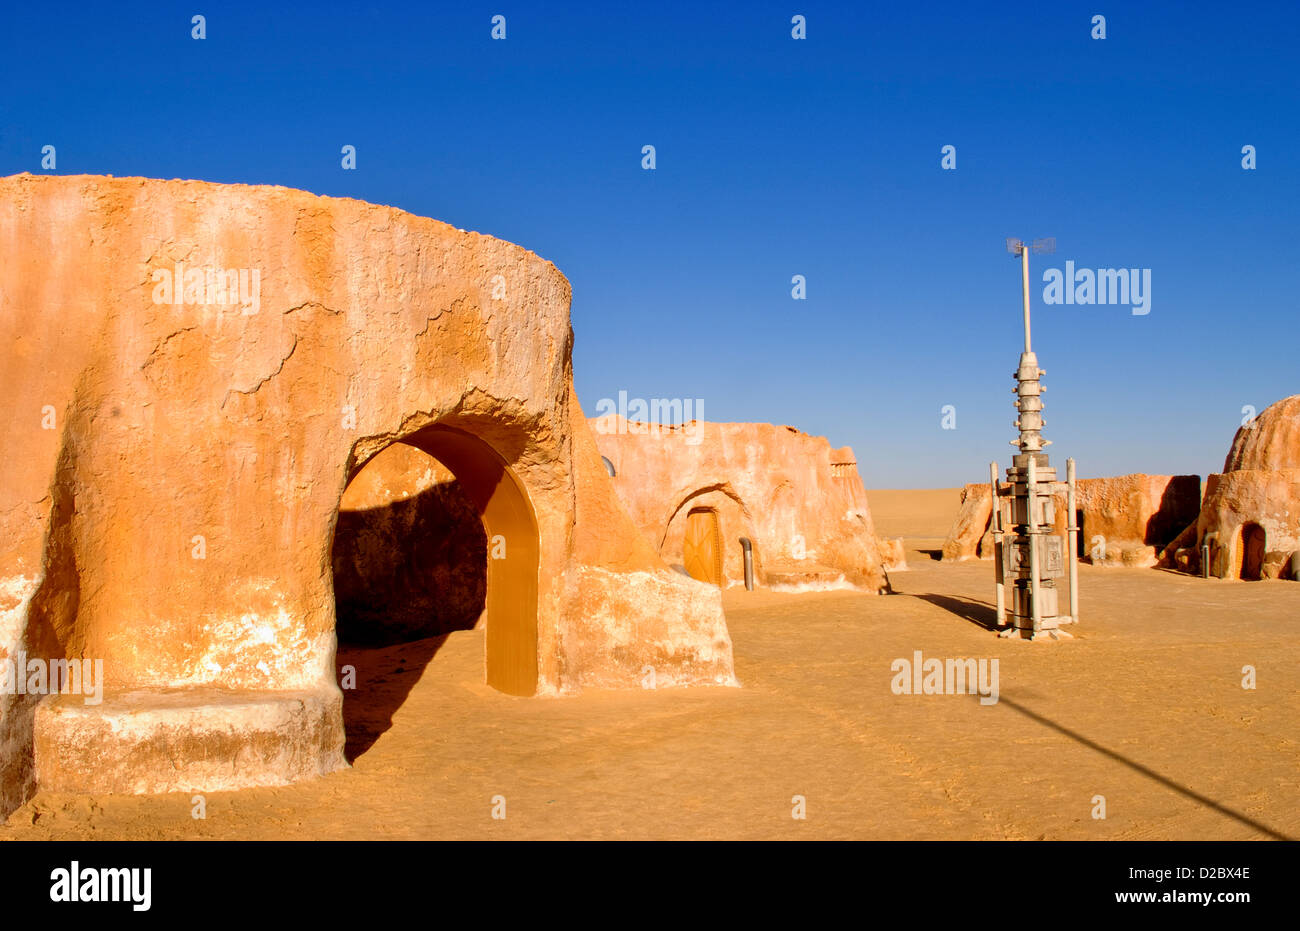 Star Wars Movie Set Near Tozeur, Tunisia Stock Photo